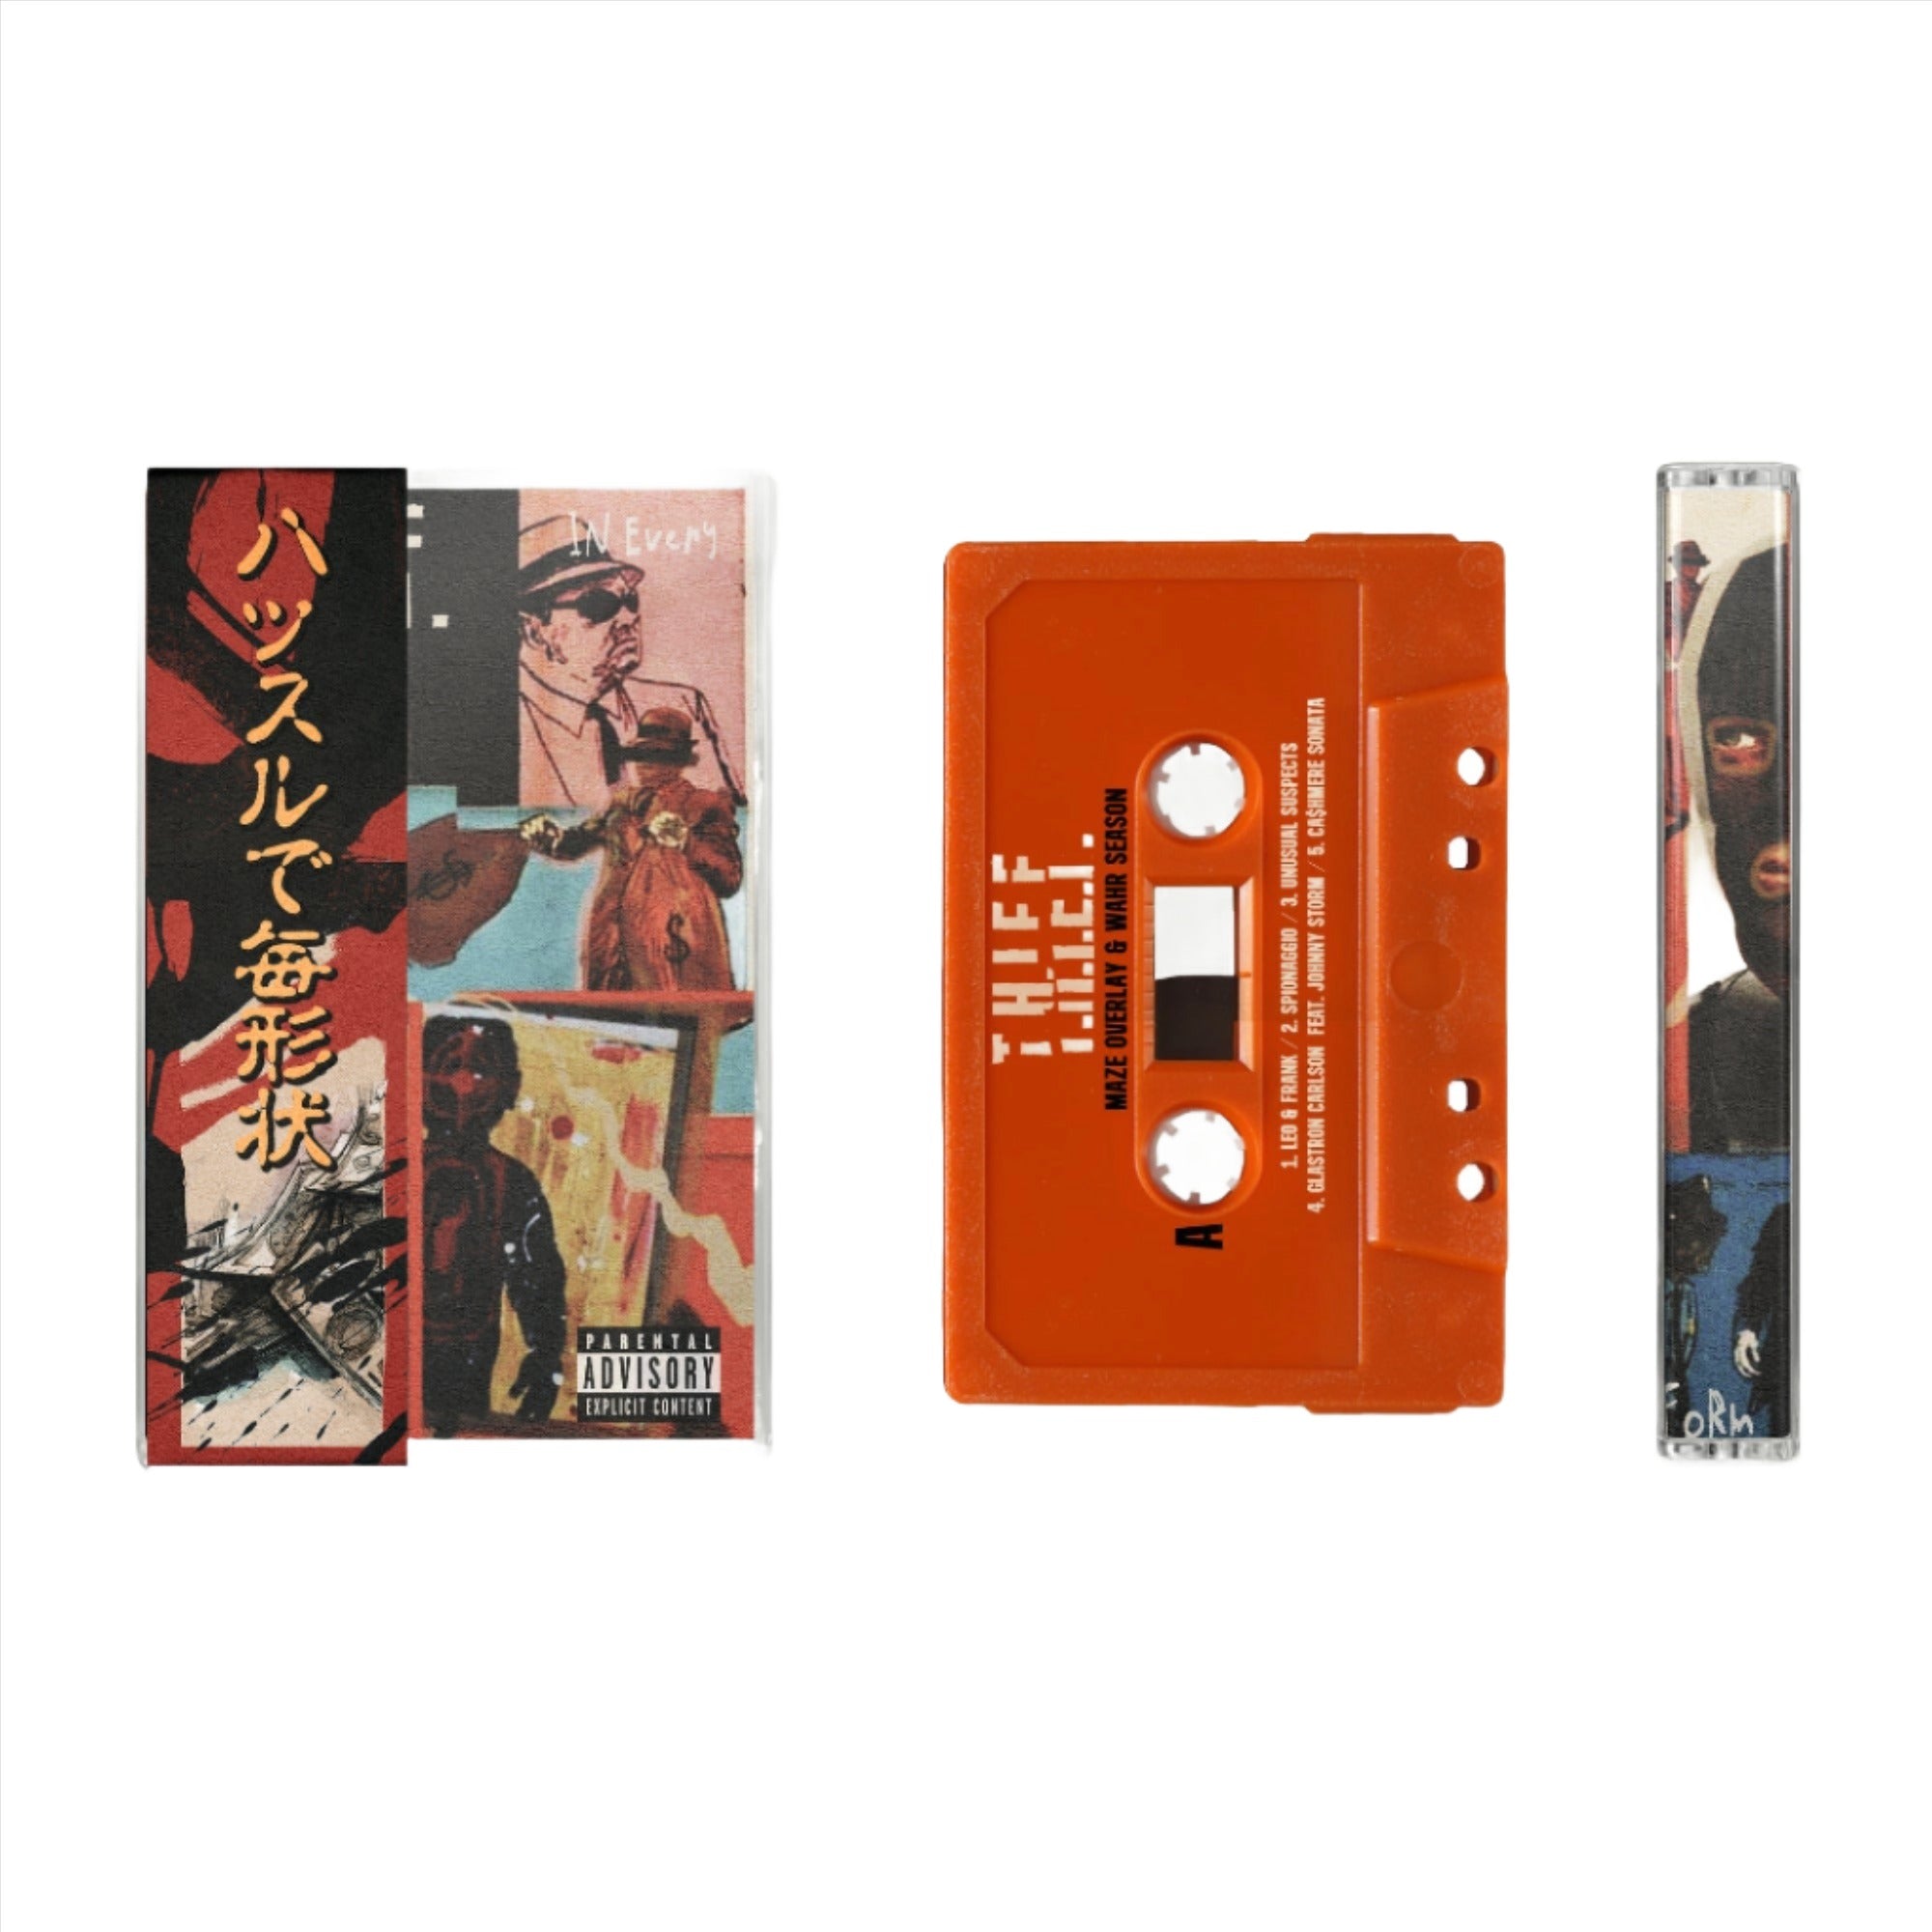 Maze Overlay & Wahr Season - T.H.I.E.F. cassette tape with OBI